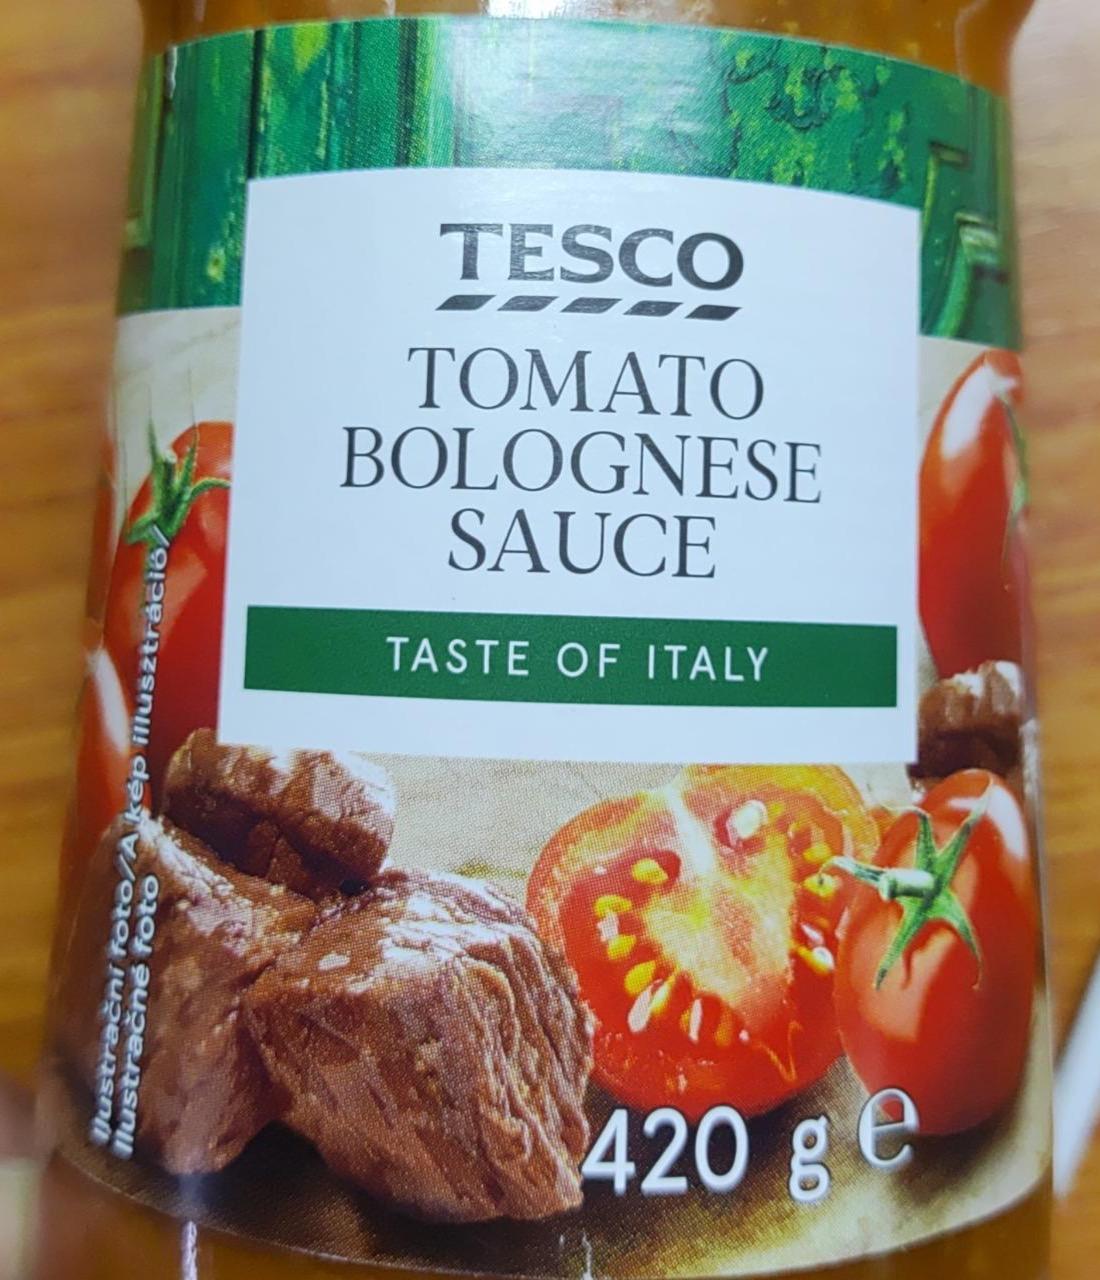 Képek - Tomato bolognese sauce Tesco